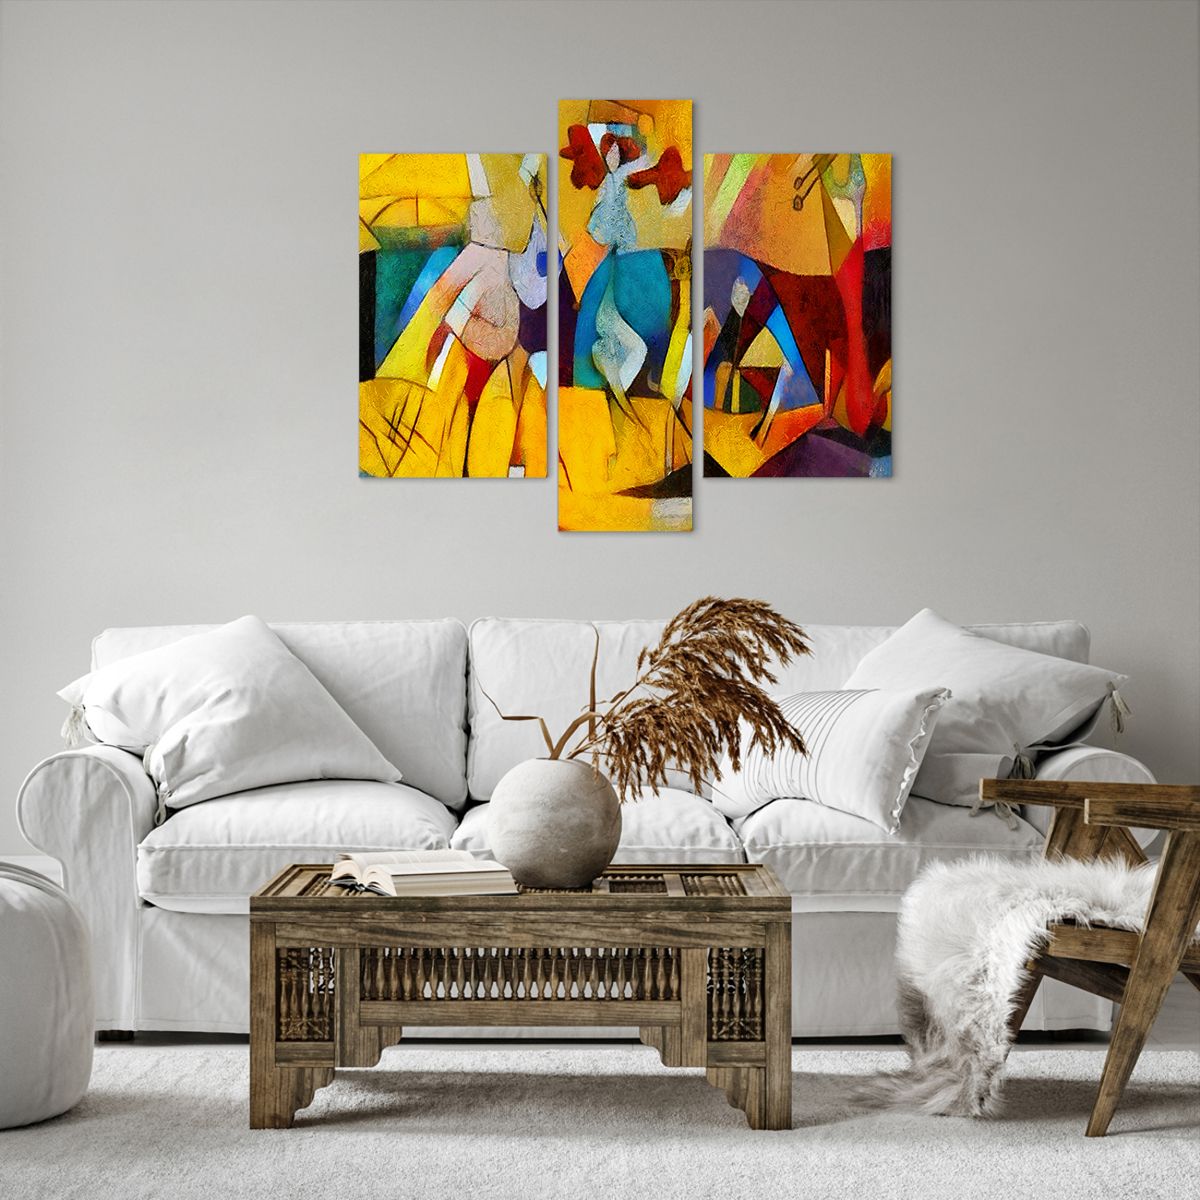 Cuadro sobre lienzo Animales, Cuadro sobre lienzo África, Cuadro sobre lienzo Cubismo, Cuadro sobre lienzo Arte, Cuadro sobre lienzo Impresionismo